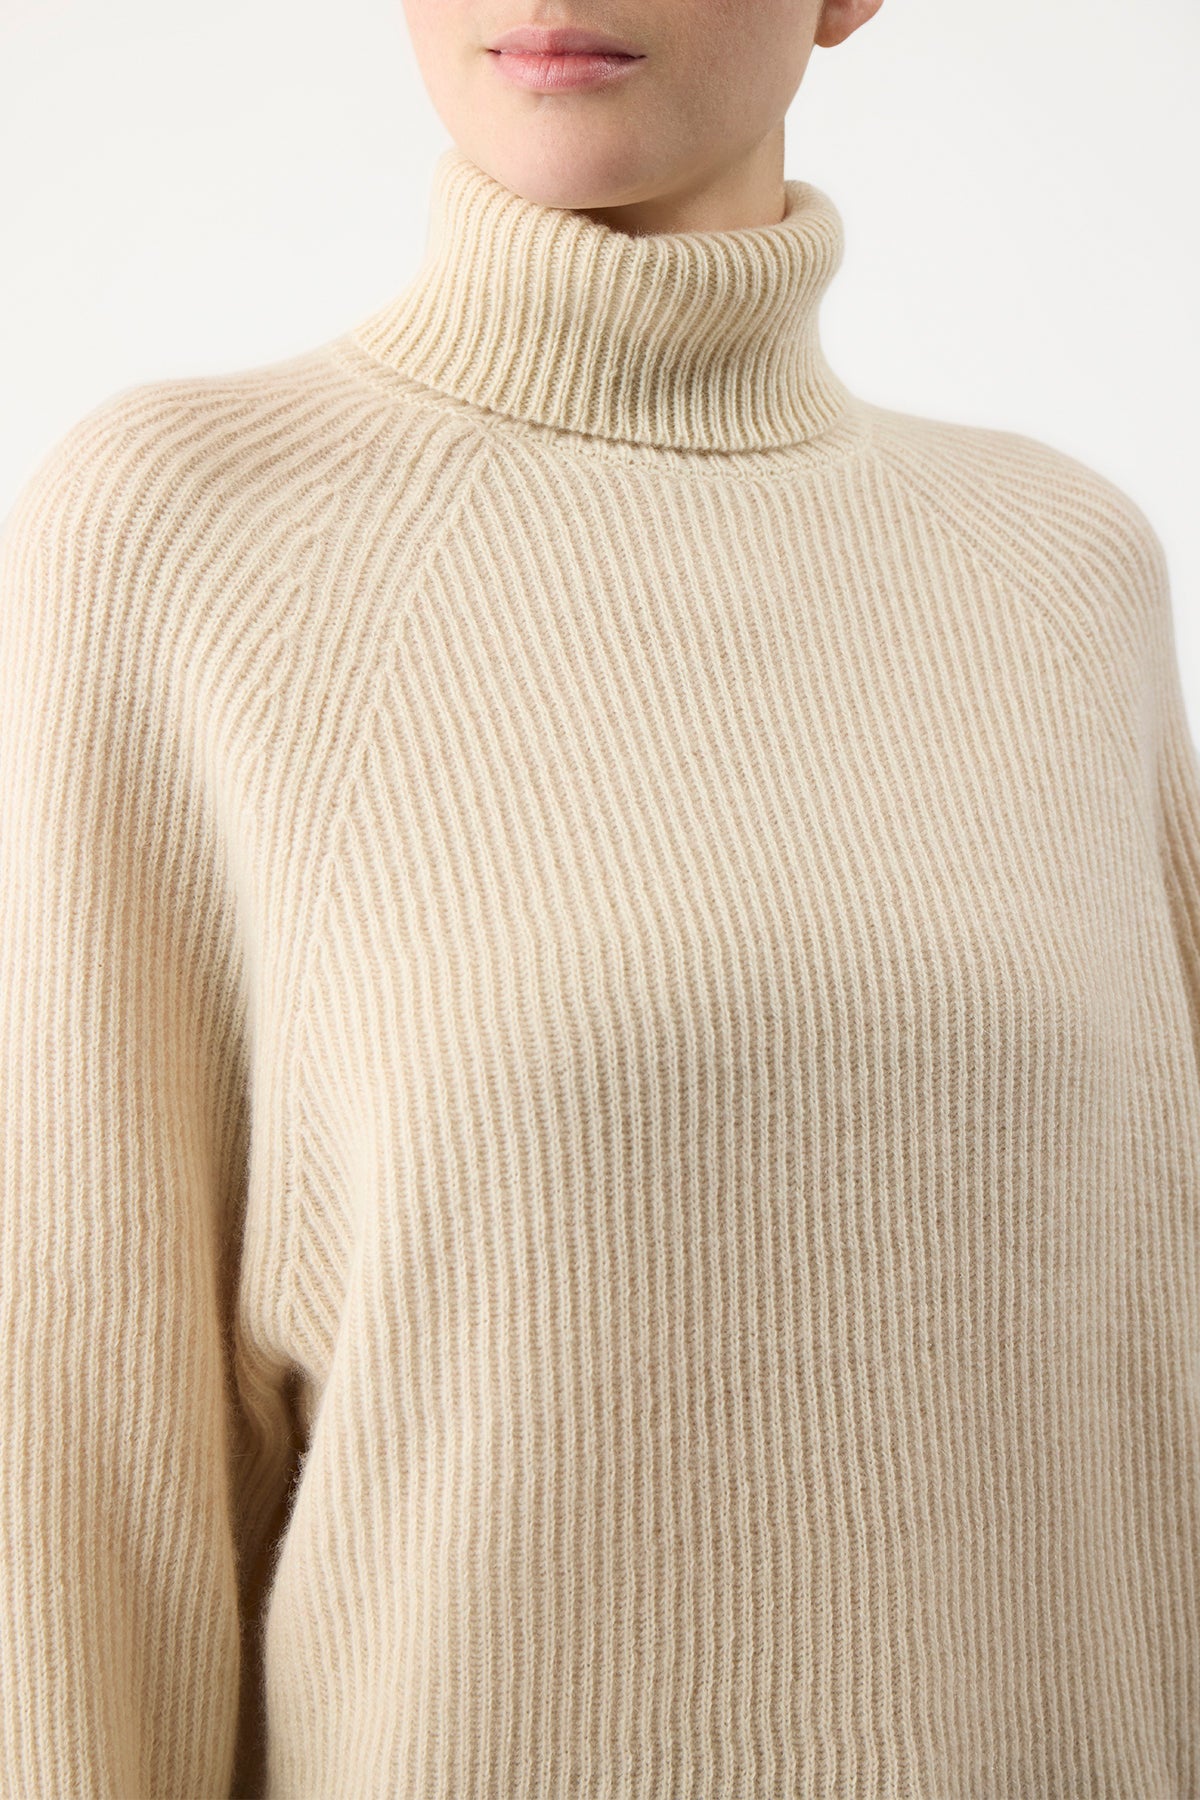 Wigman Sweater in Cashmere